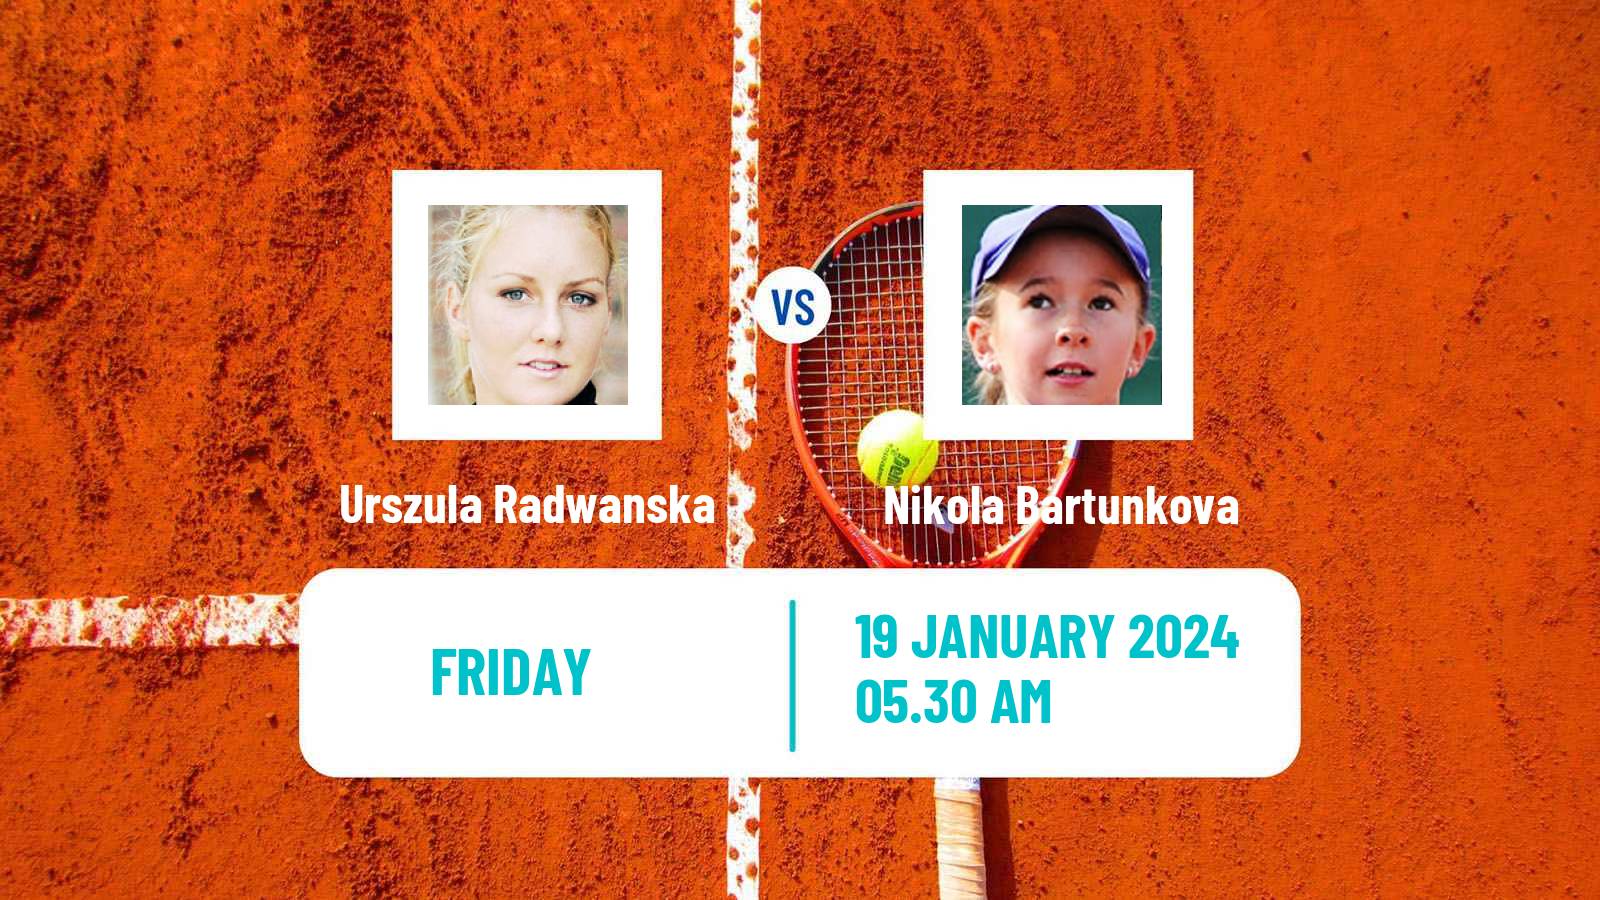 Tennis ITF W35 Sunderland Women Urszula Radwanska - Nikola Bartunkova